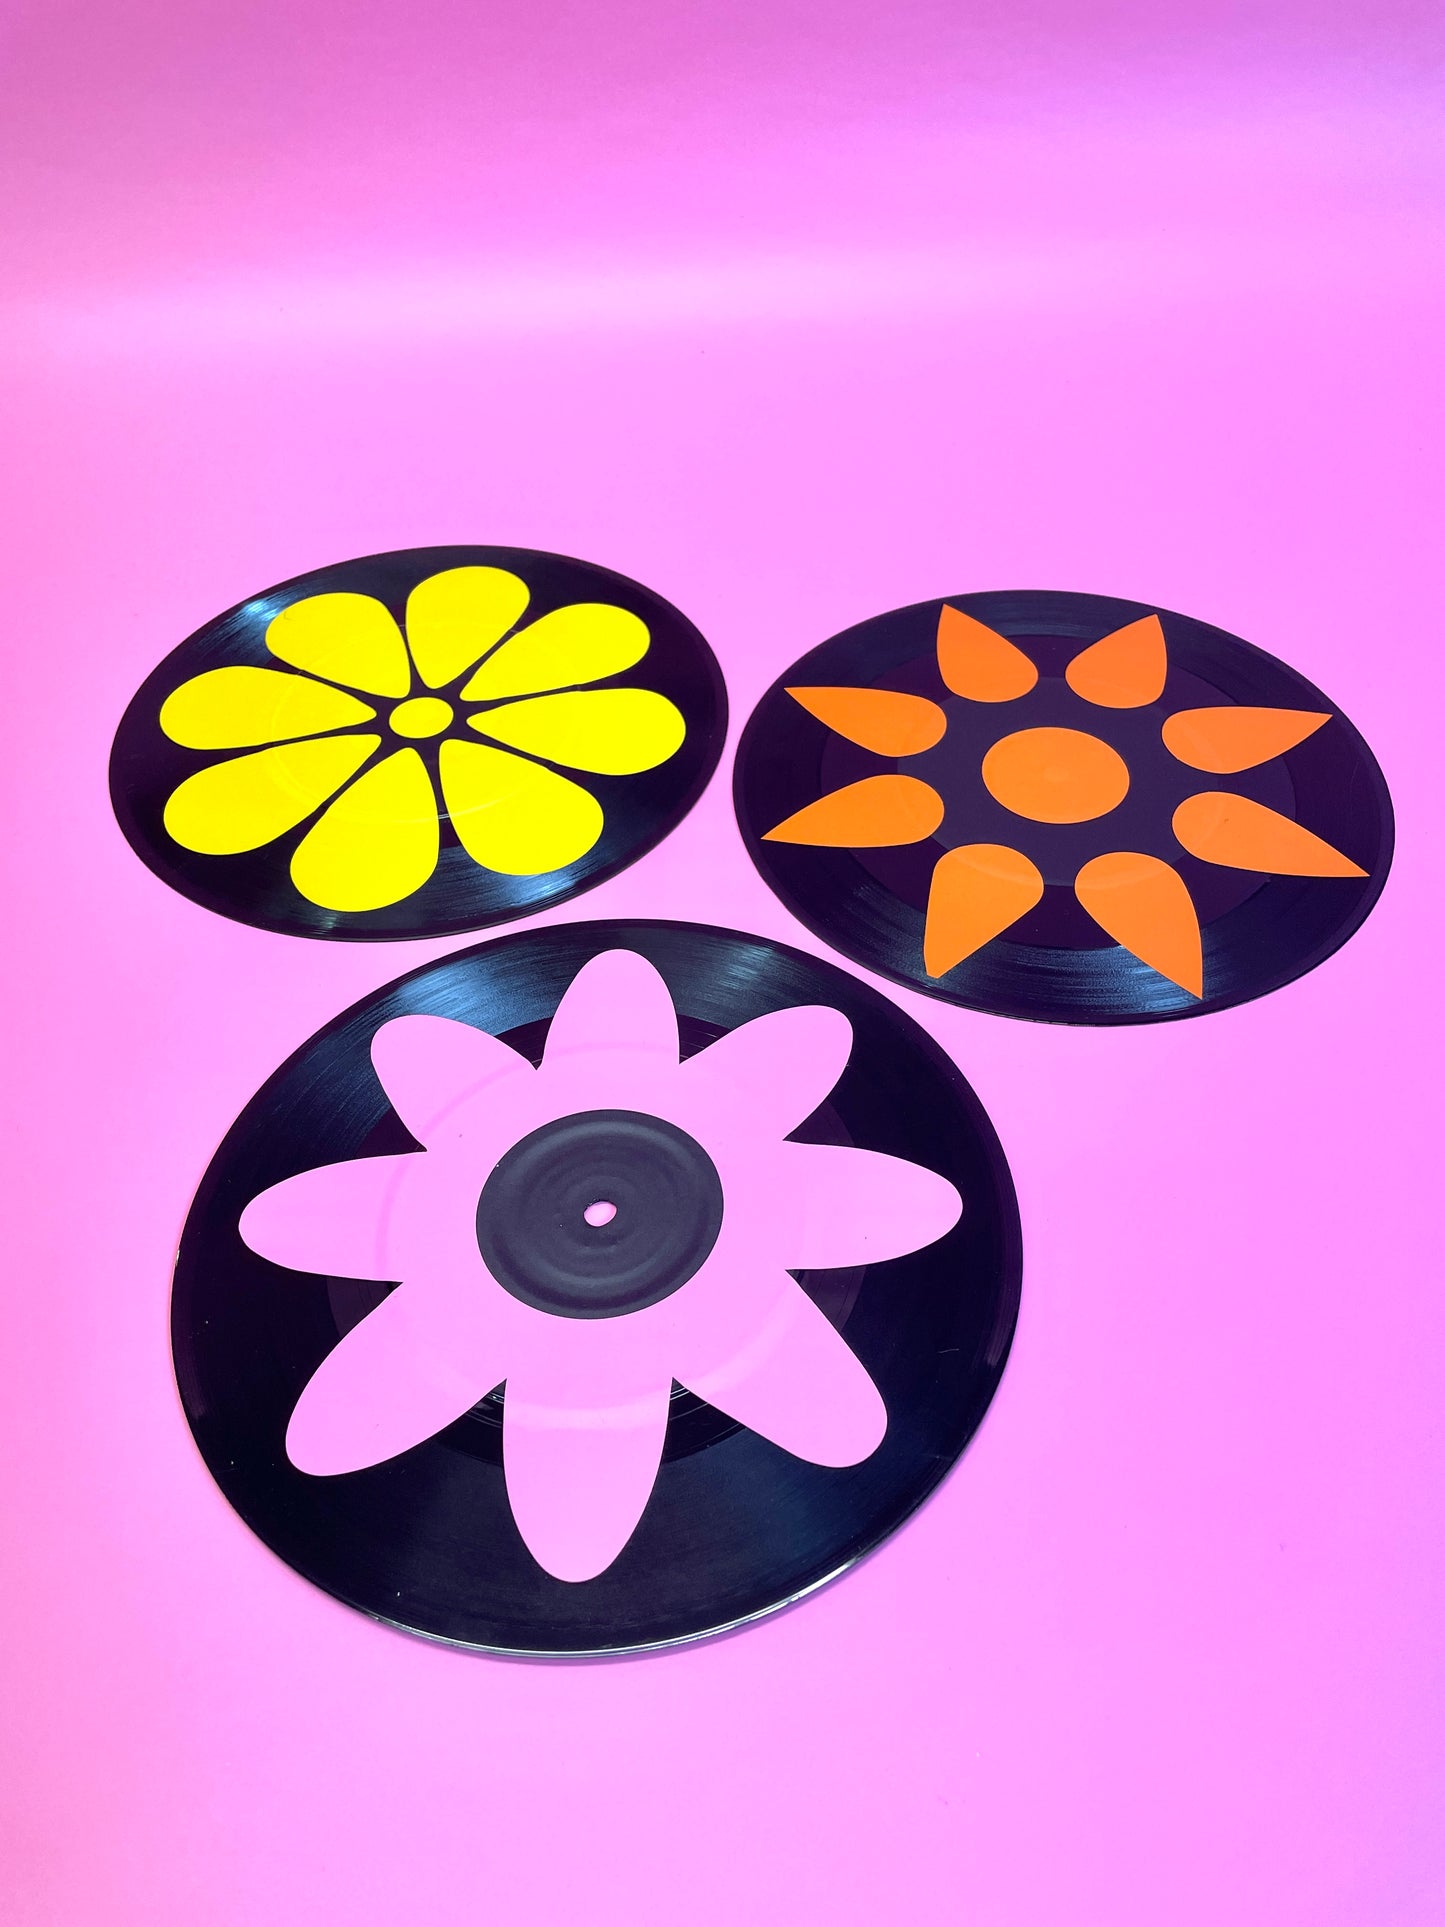 Flower pattern set of 3 upcycled vintage 7" 45 LP vinyl records home decor